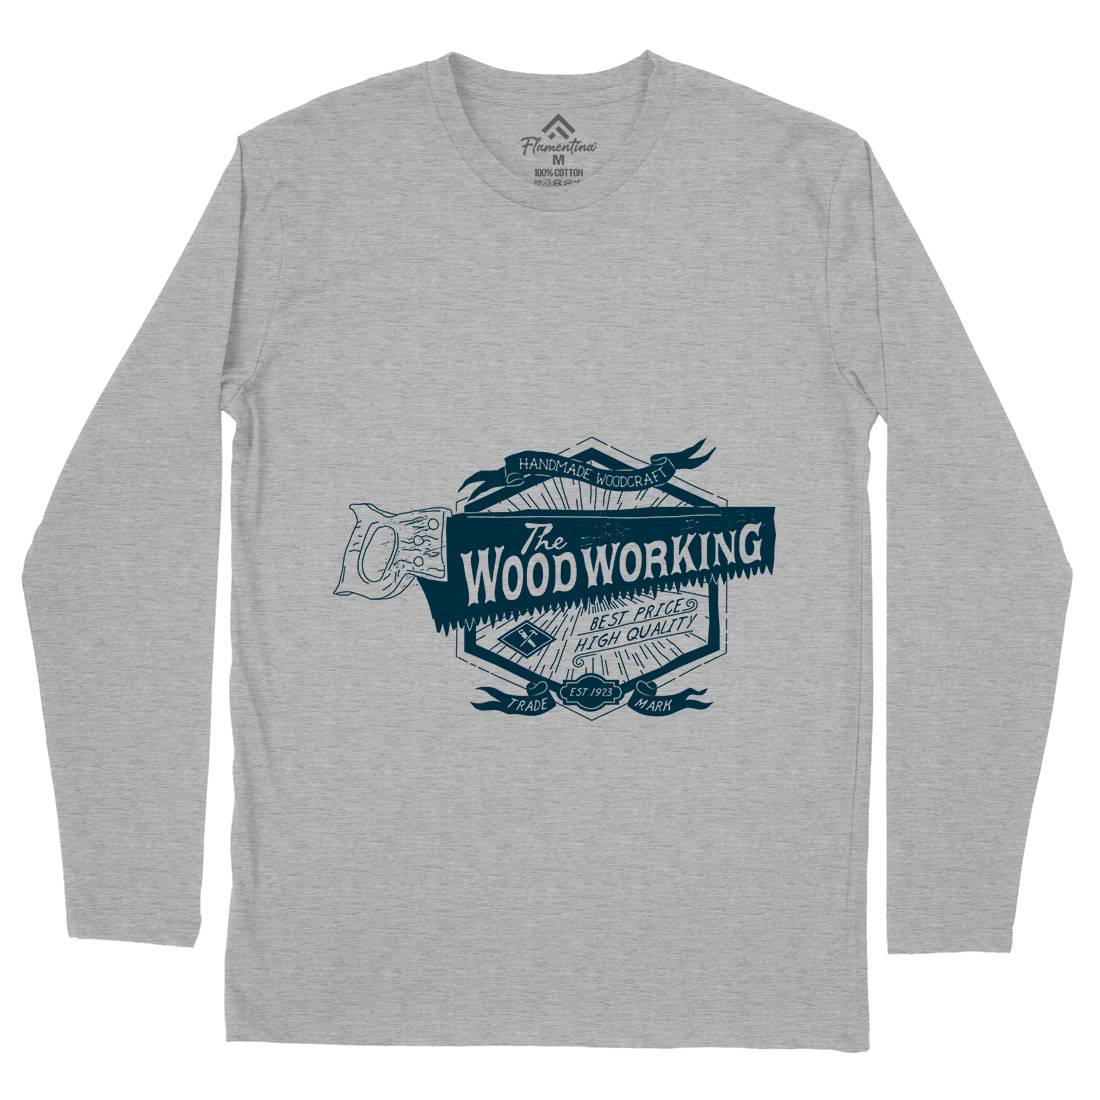 Wood Working Mens Long Sleeve T-Shirt Work A973